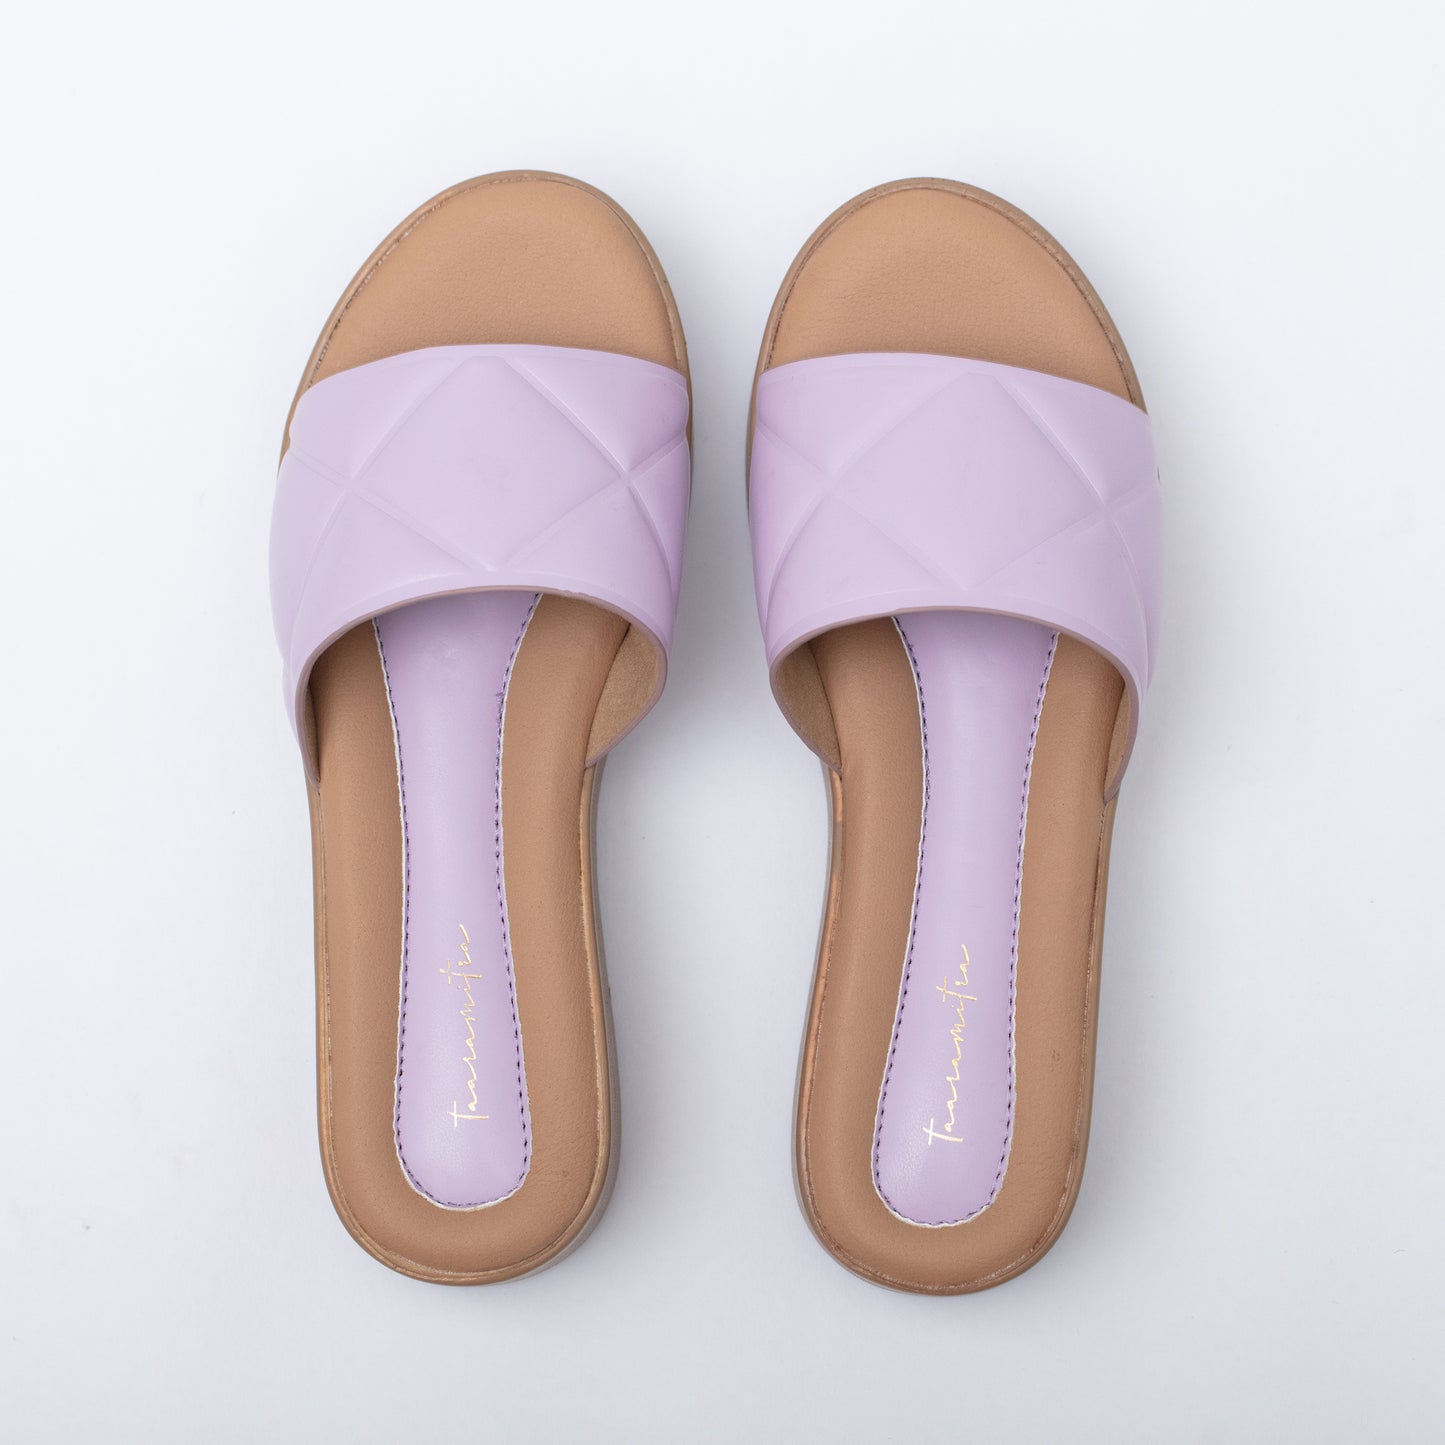 Mista flatform lilac heel sandals